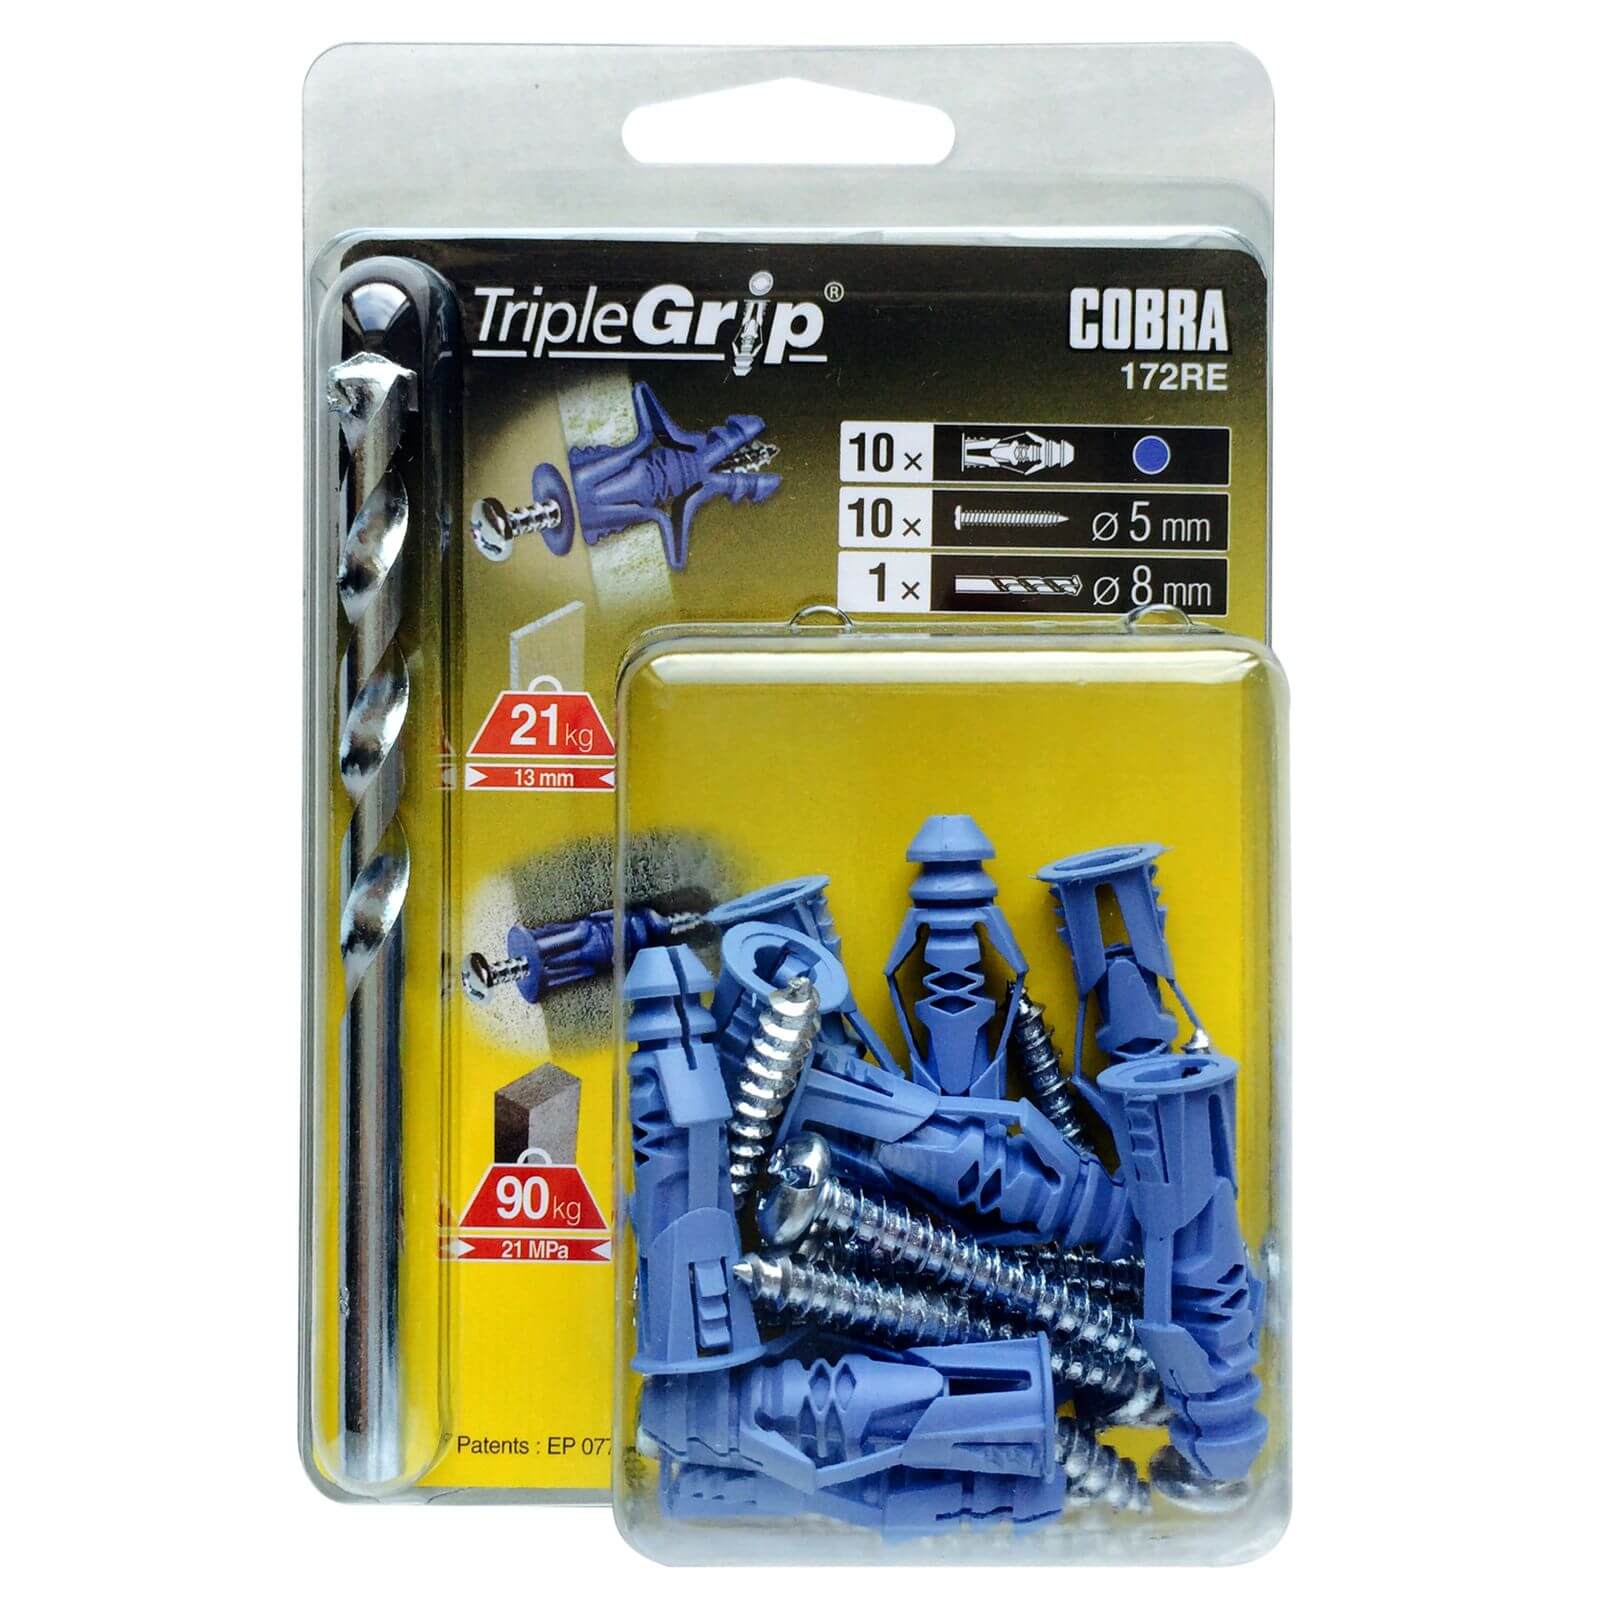 Cobra Triple Grip - Multi Purpose Wall Fixings x 10 - 172RE